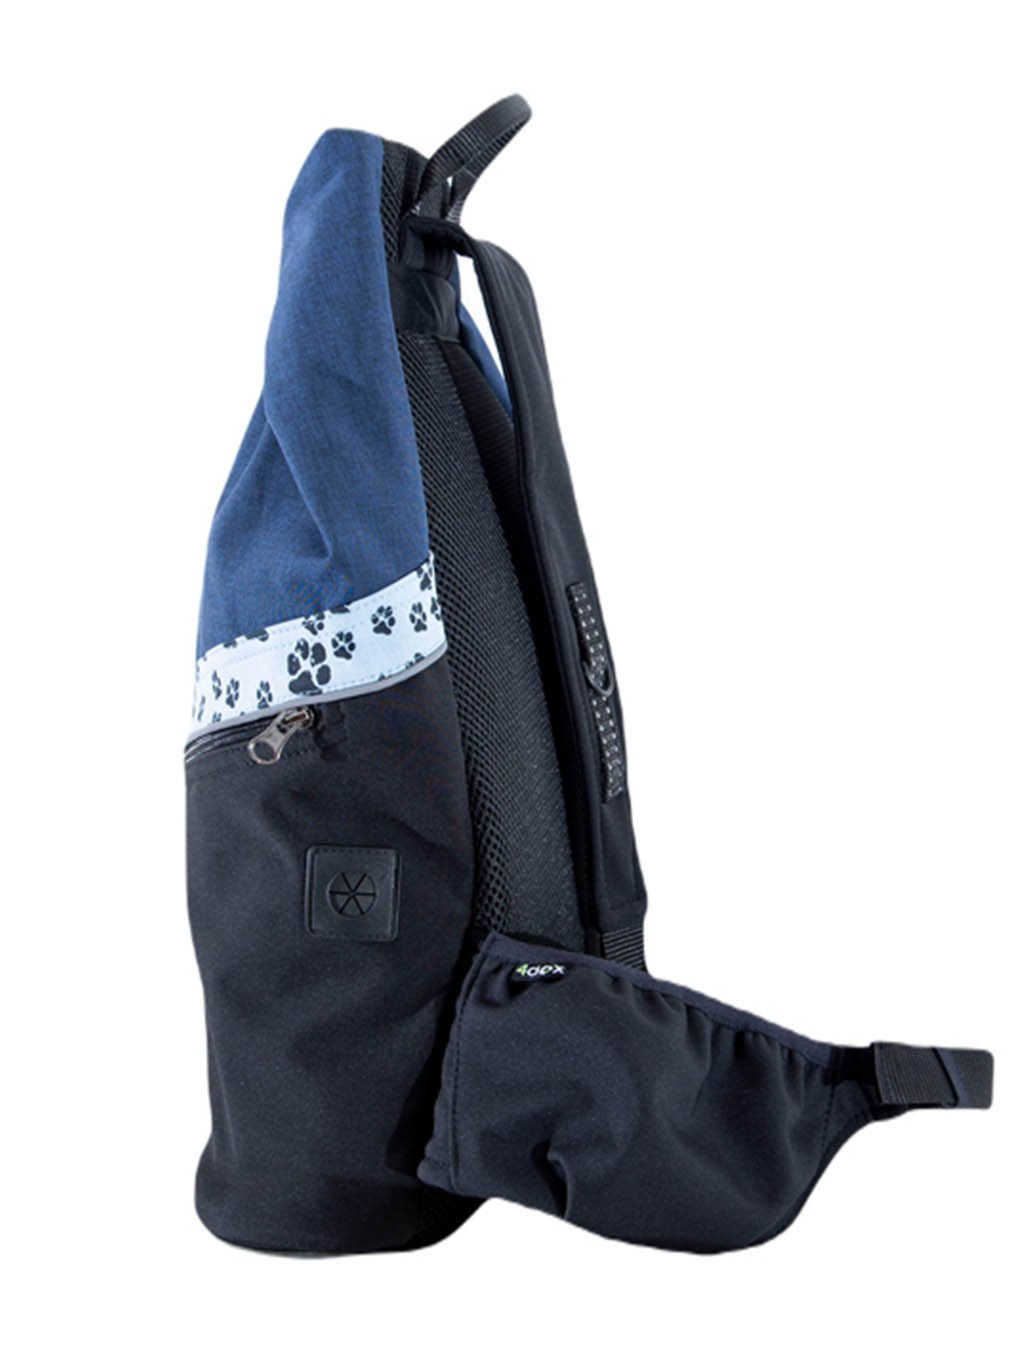 Training backpack cross Blueberry 4dox